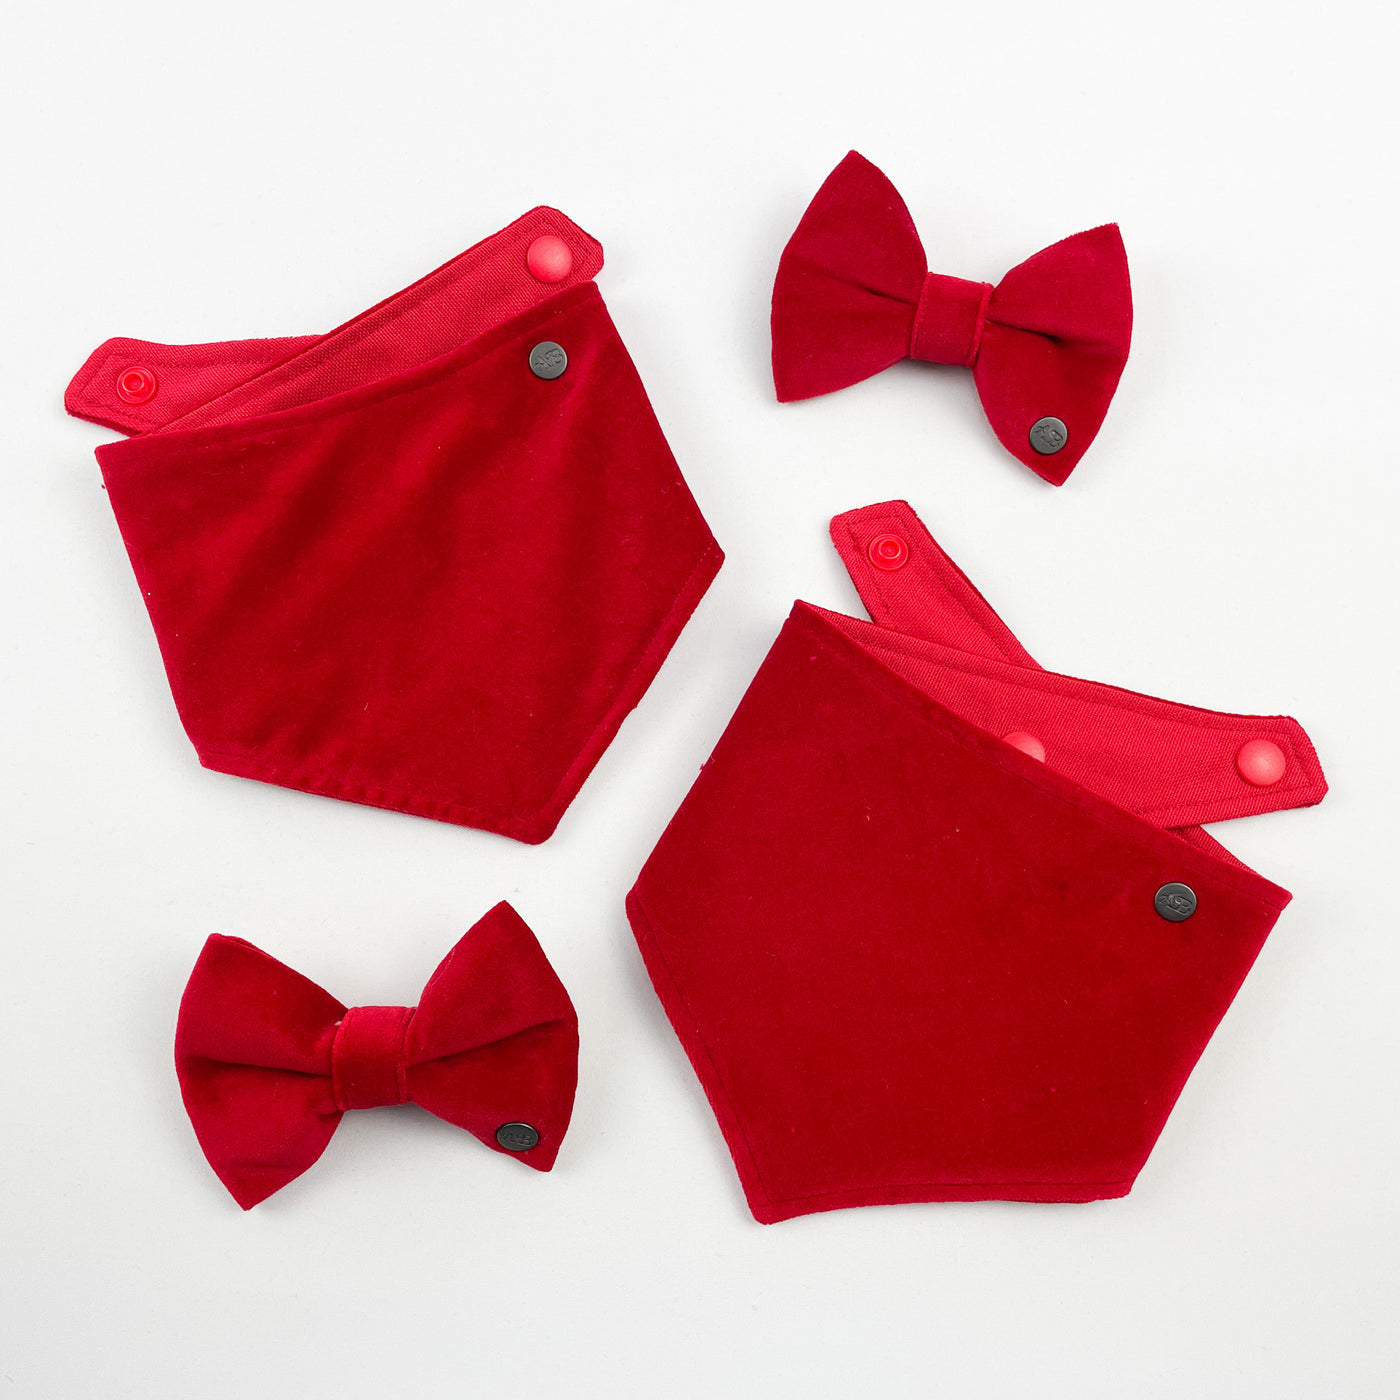 Two Red velvet dog bandanas and two red velvet bow ties